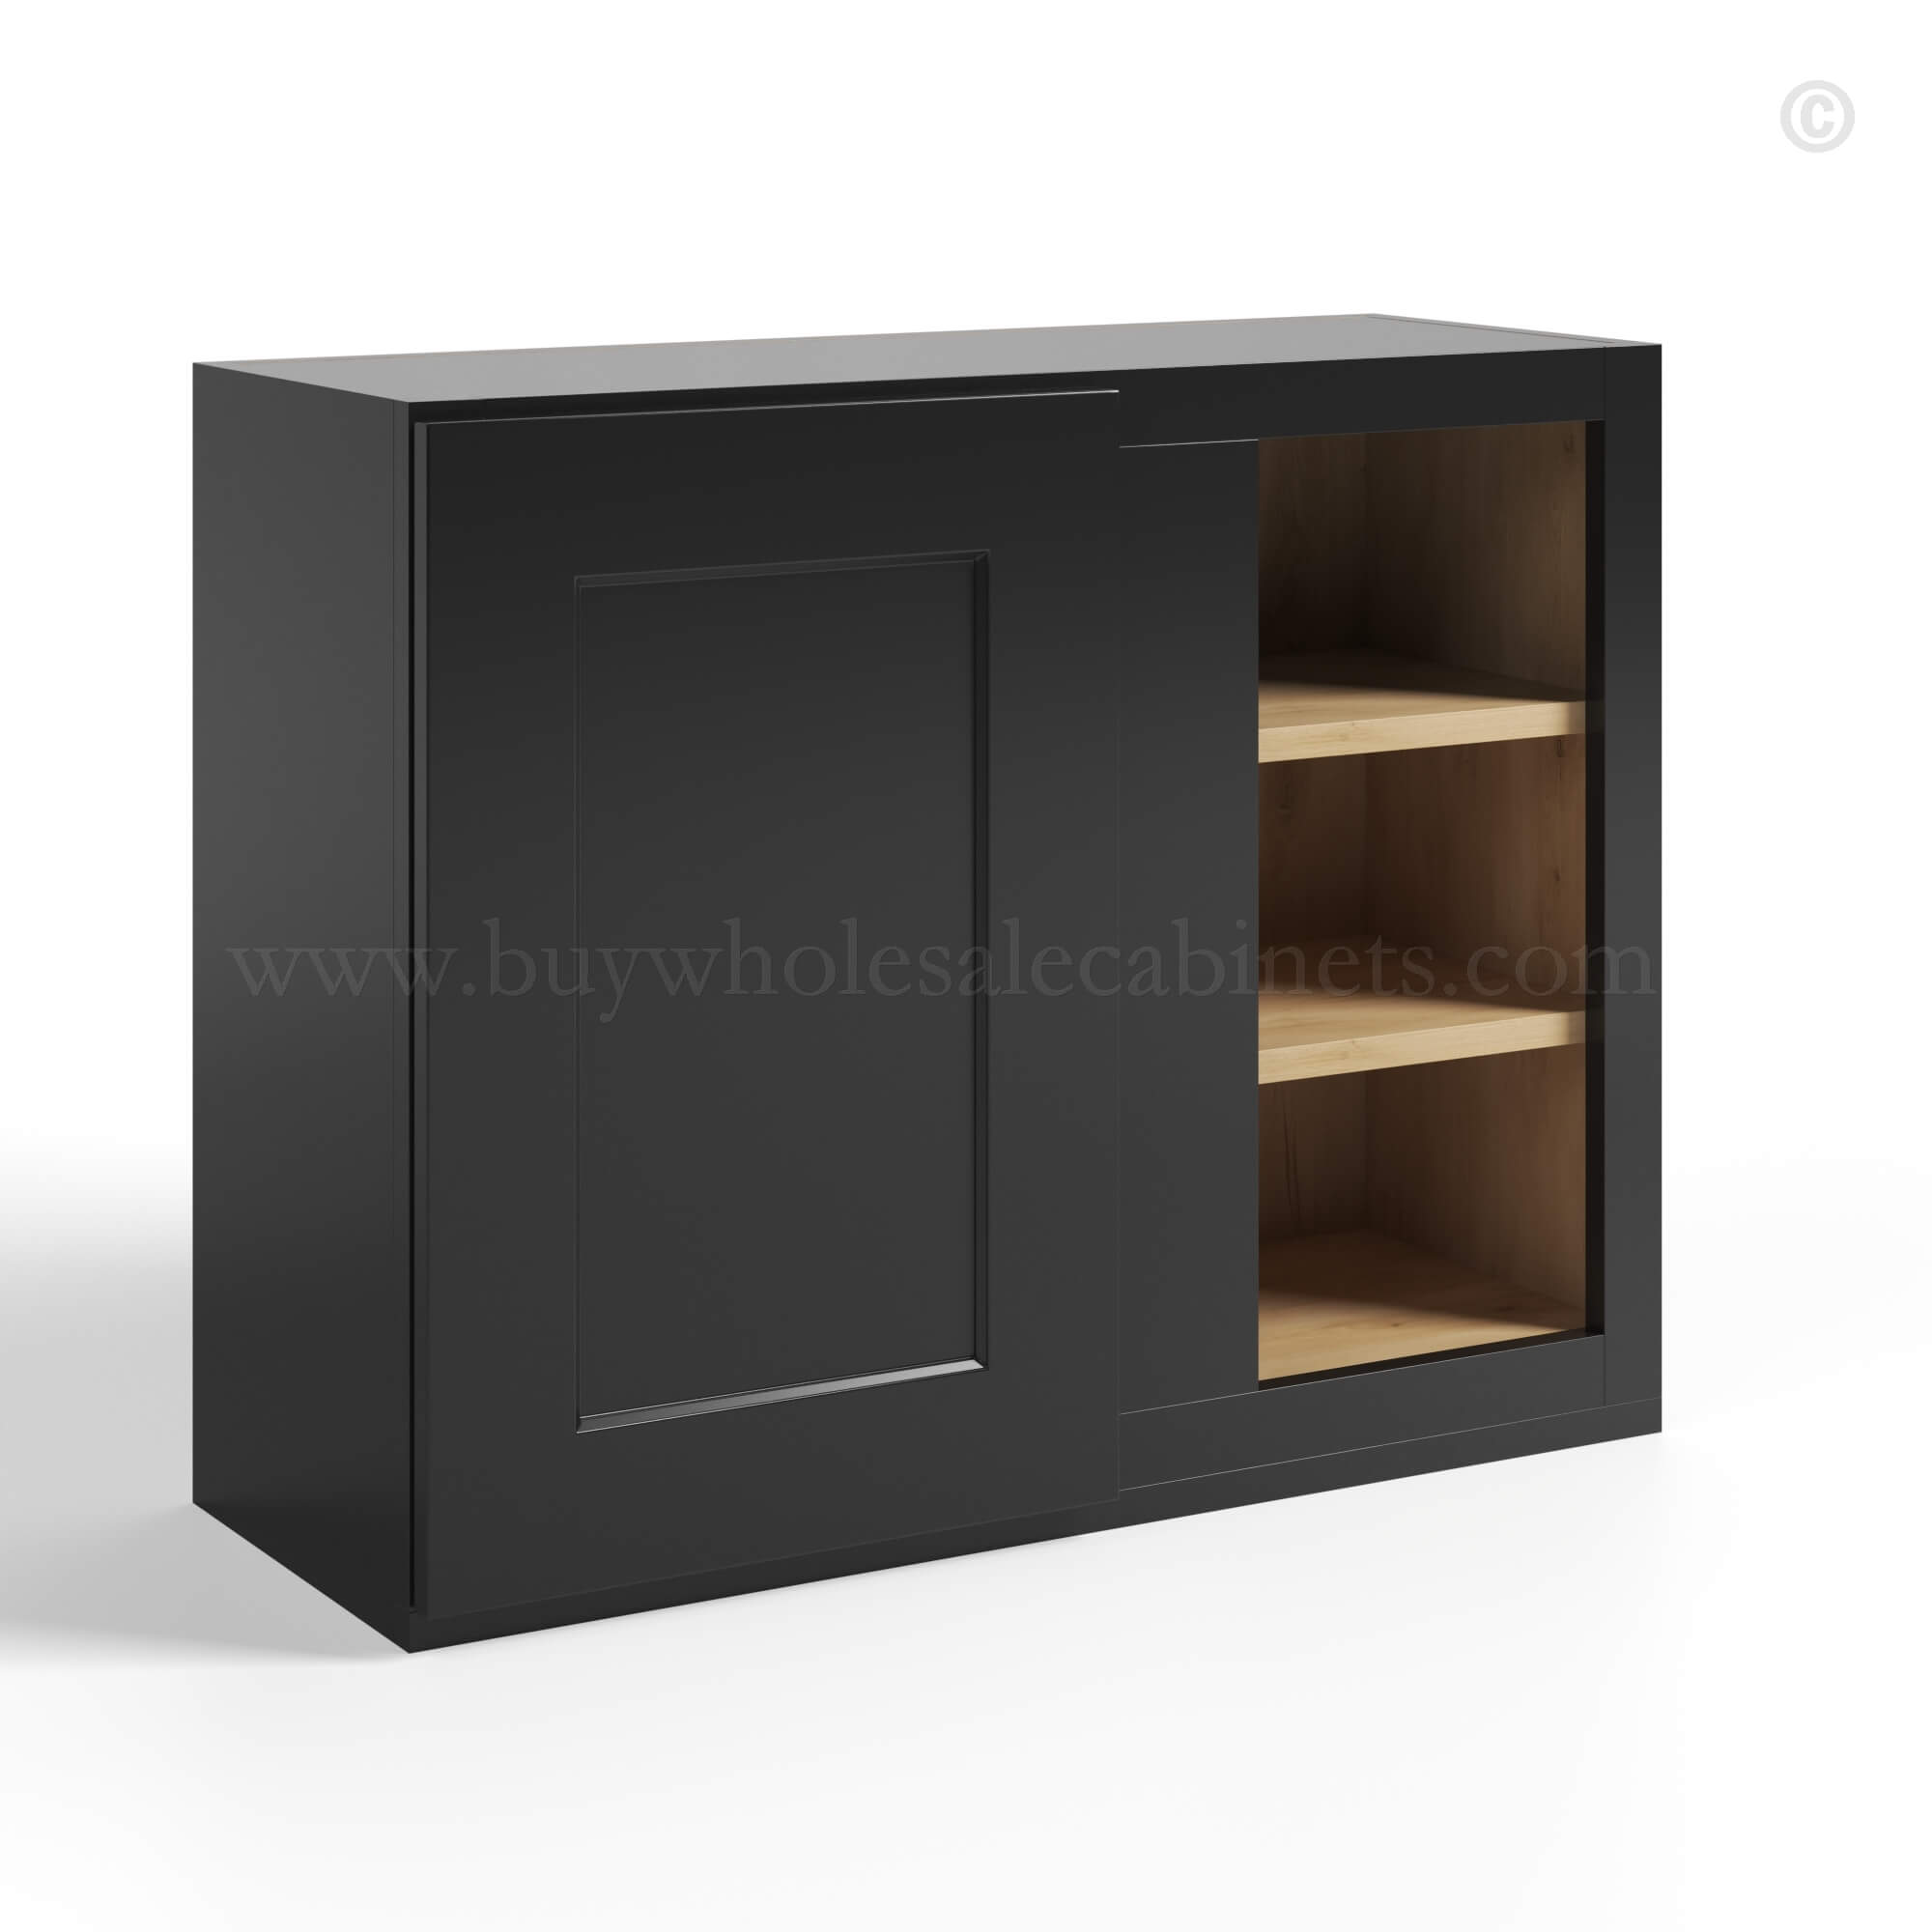 Black Shaker Wall Blind Corner Cabinet, rta cabinets, wholesale cabinets